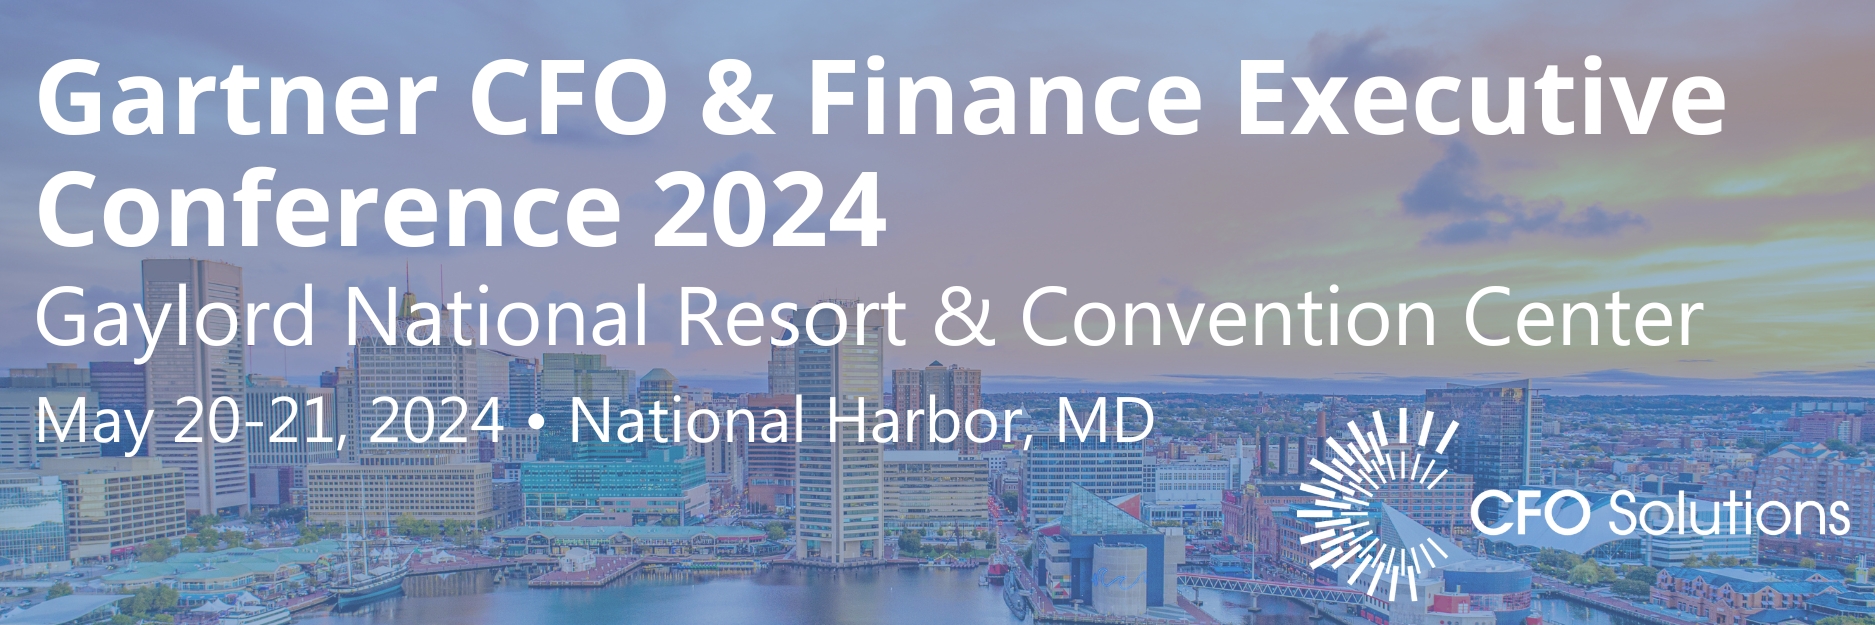 Gartner CFO & Finance Executive Conference 2024 CFO Solutions events announcement